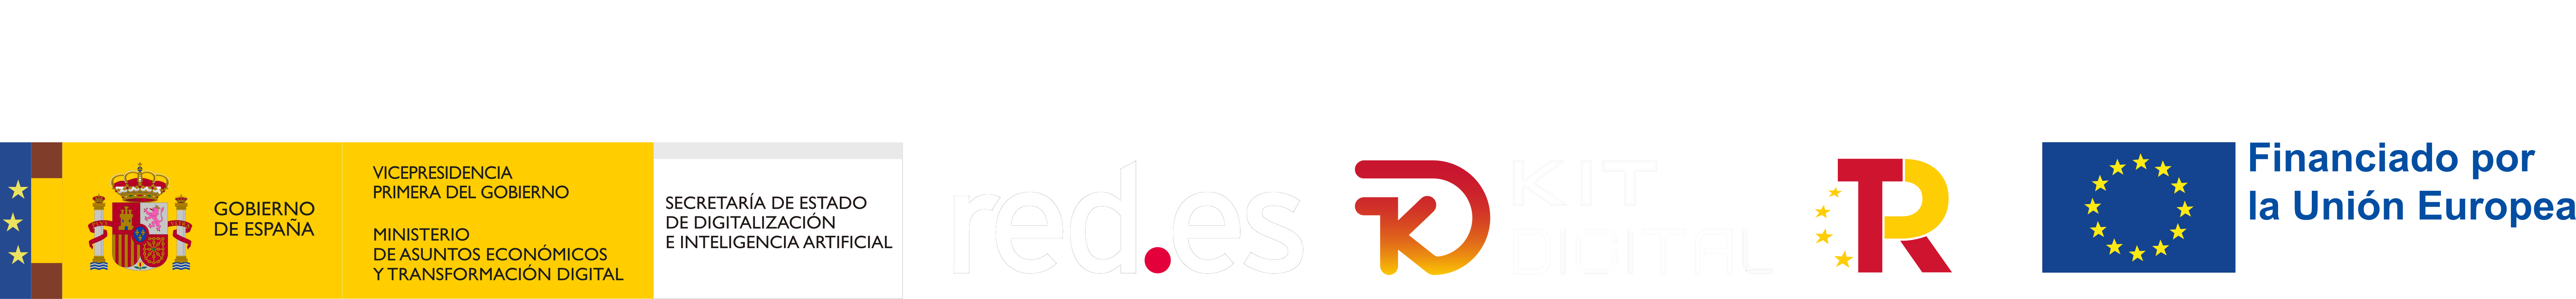 dafy_agencia_Kit_Digital_Madrid_Logo-digitalizadores-blanco